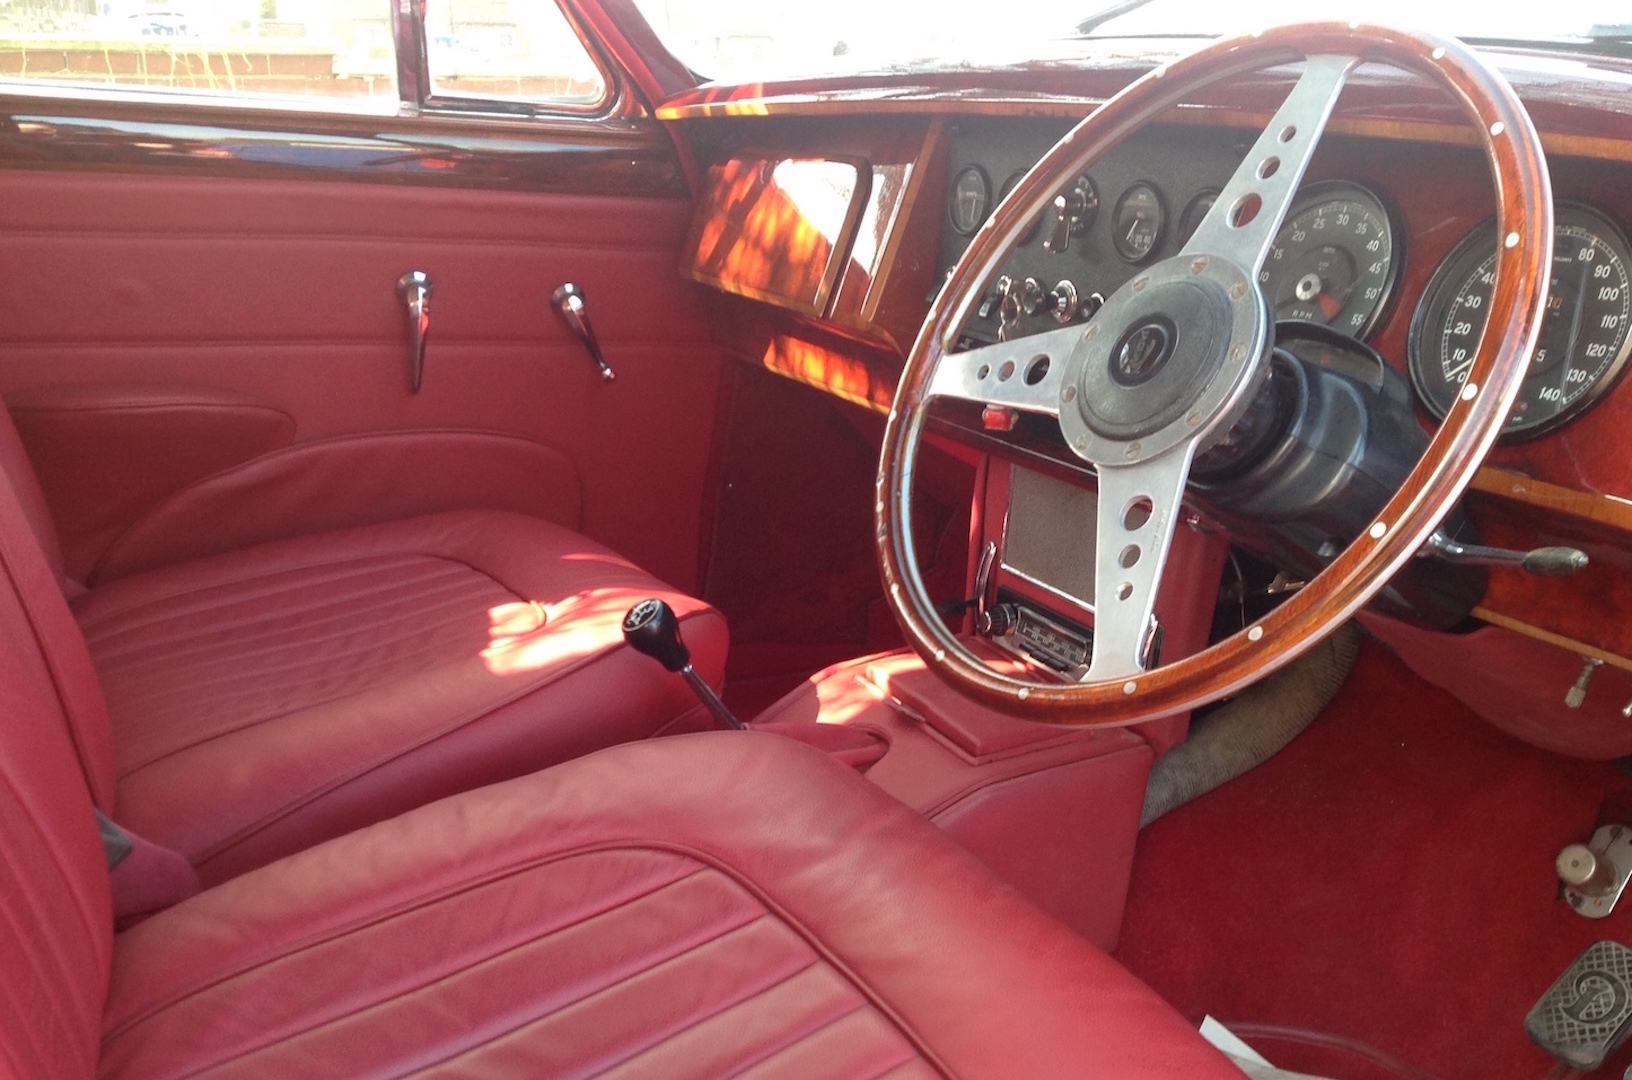 Refurbished Jaguar interior